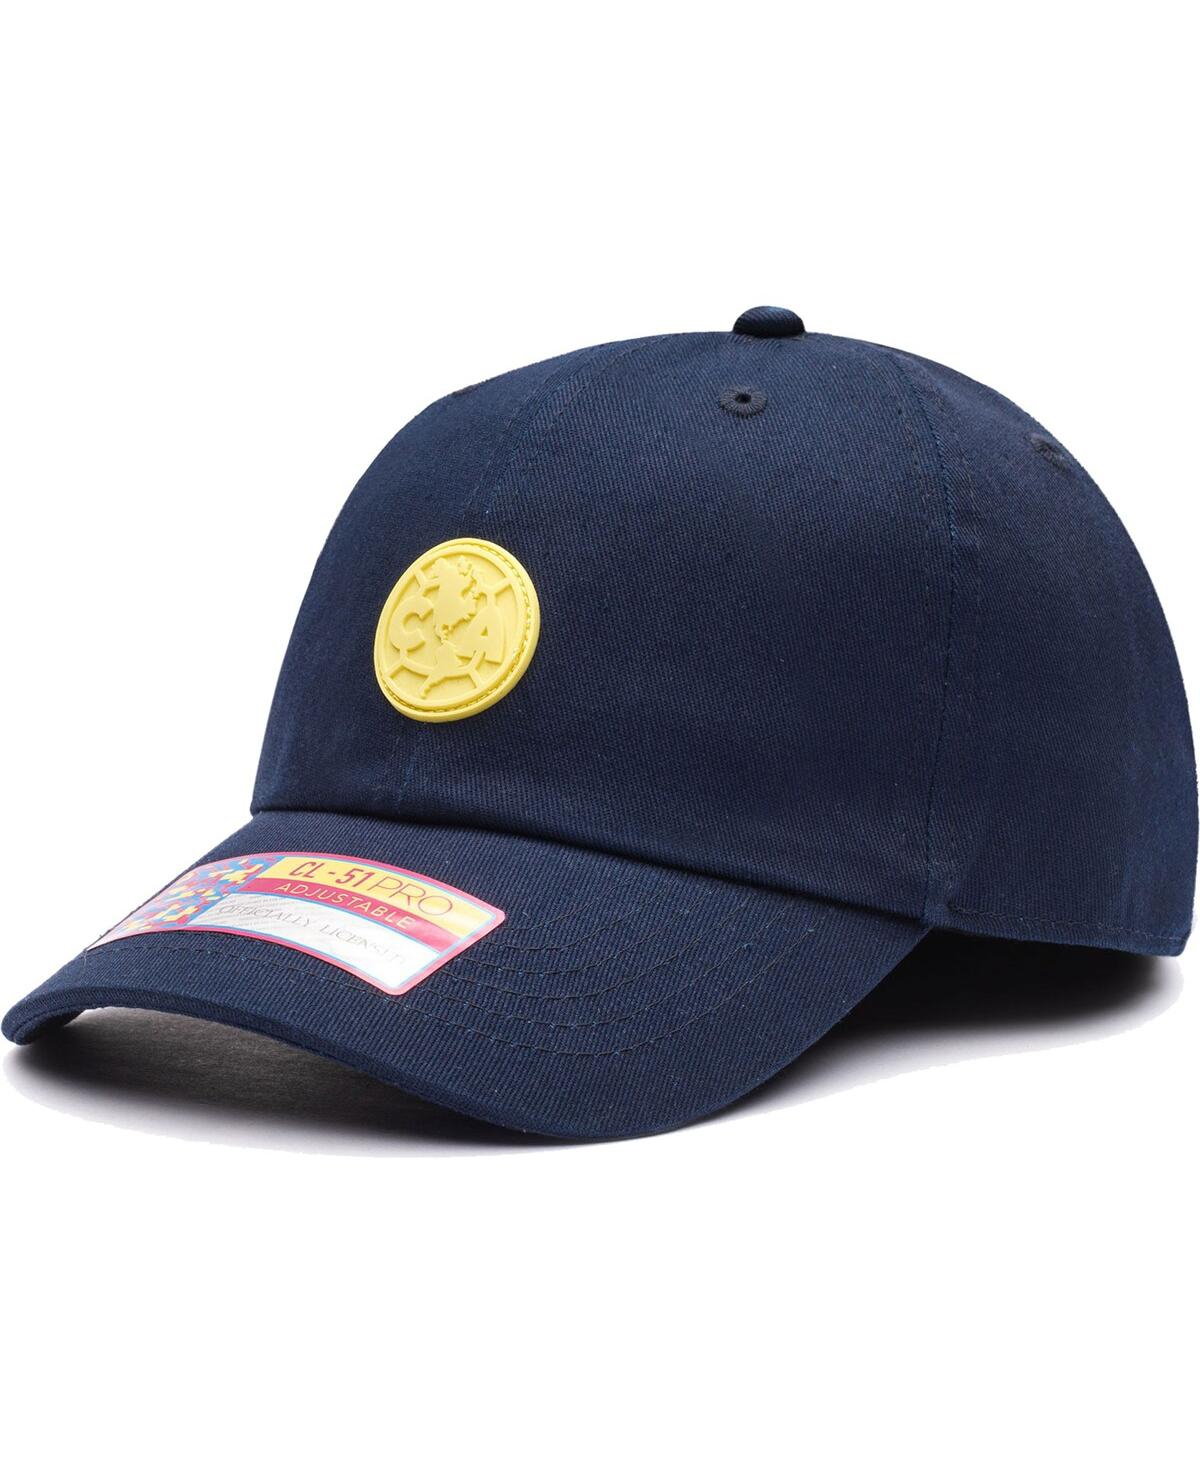 Shop Fan Ink Men's Navy Club America Casuals Adjustable Hat